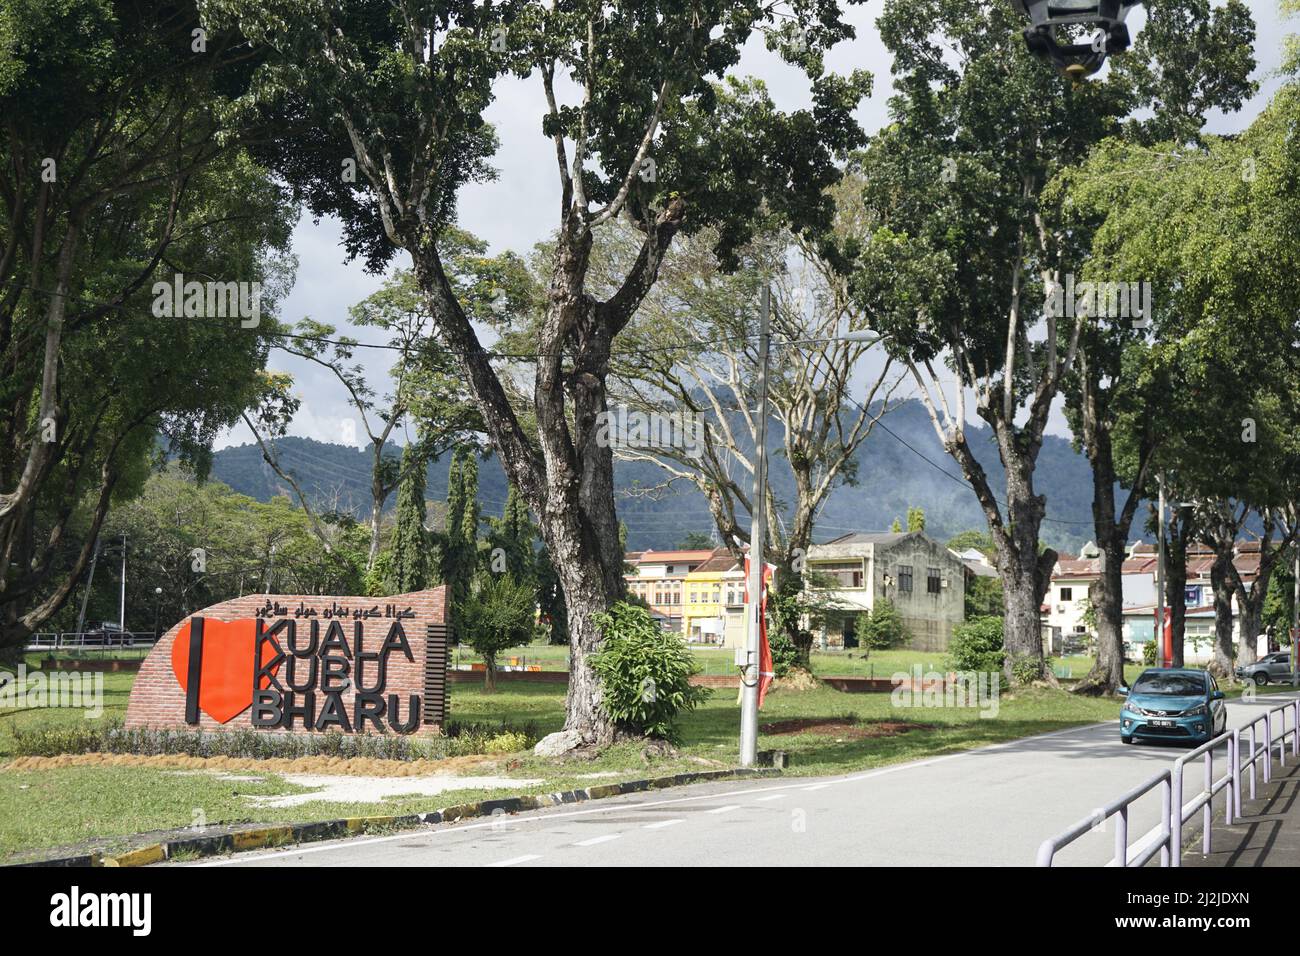 Cartel de bienvenida a Kuala Kubu Bharu, Selangor, Malasia Foto de stock